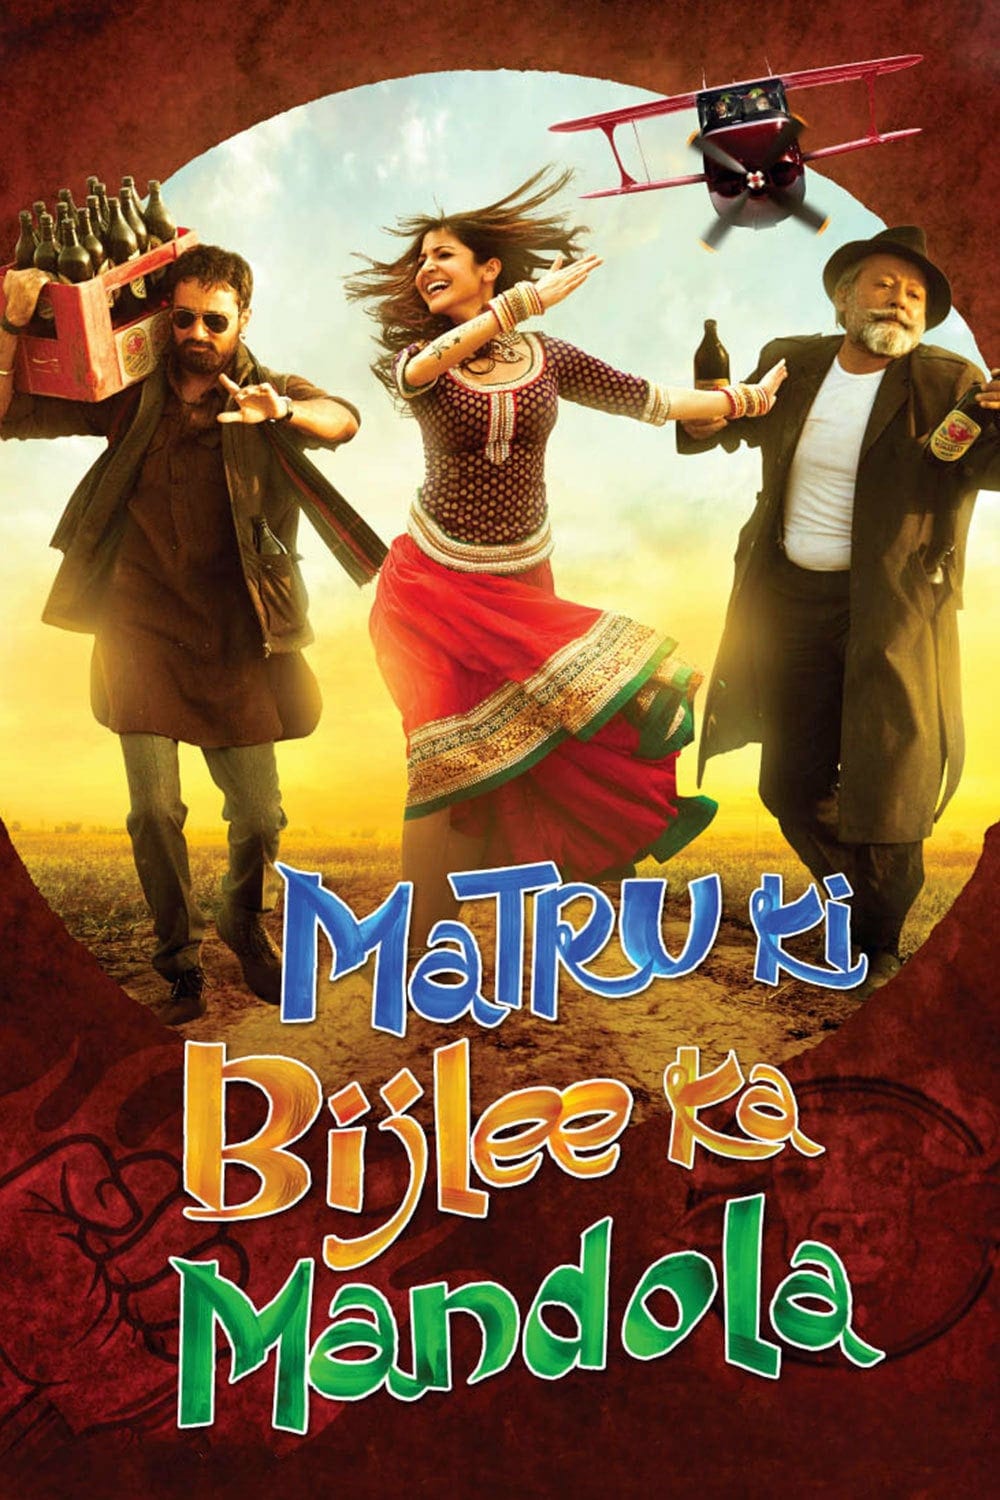 Poster for the movie "Matru Ki Bijlee Ka Mandola"